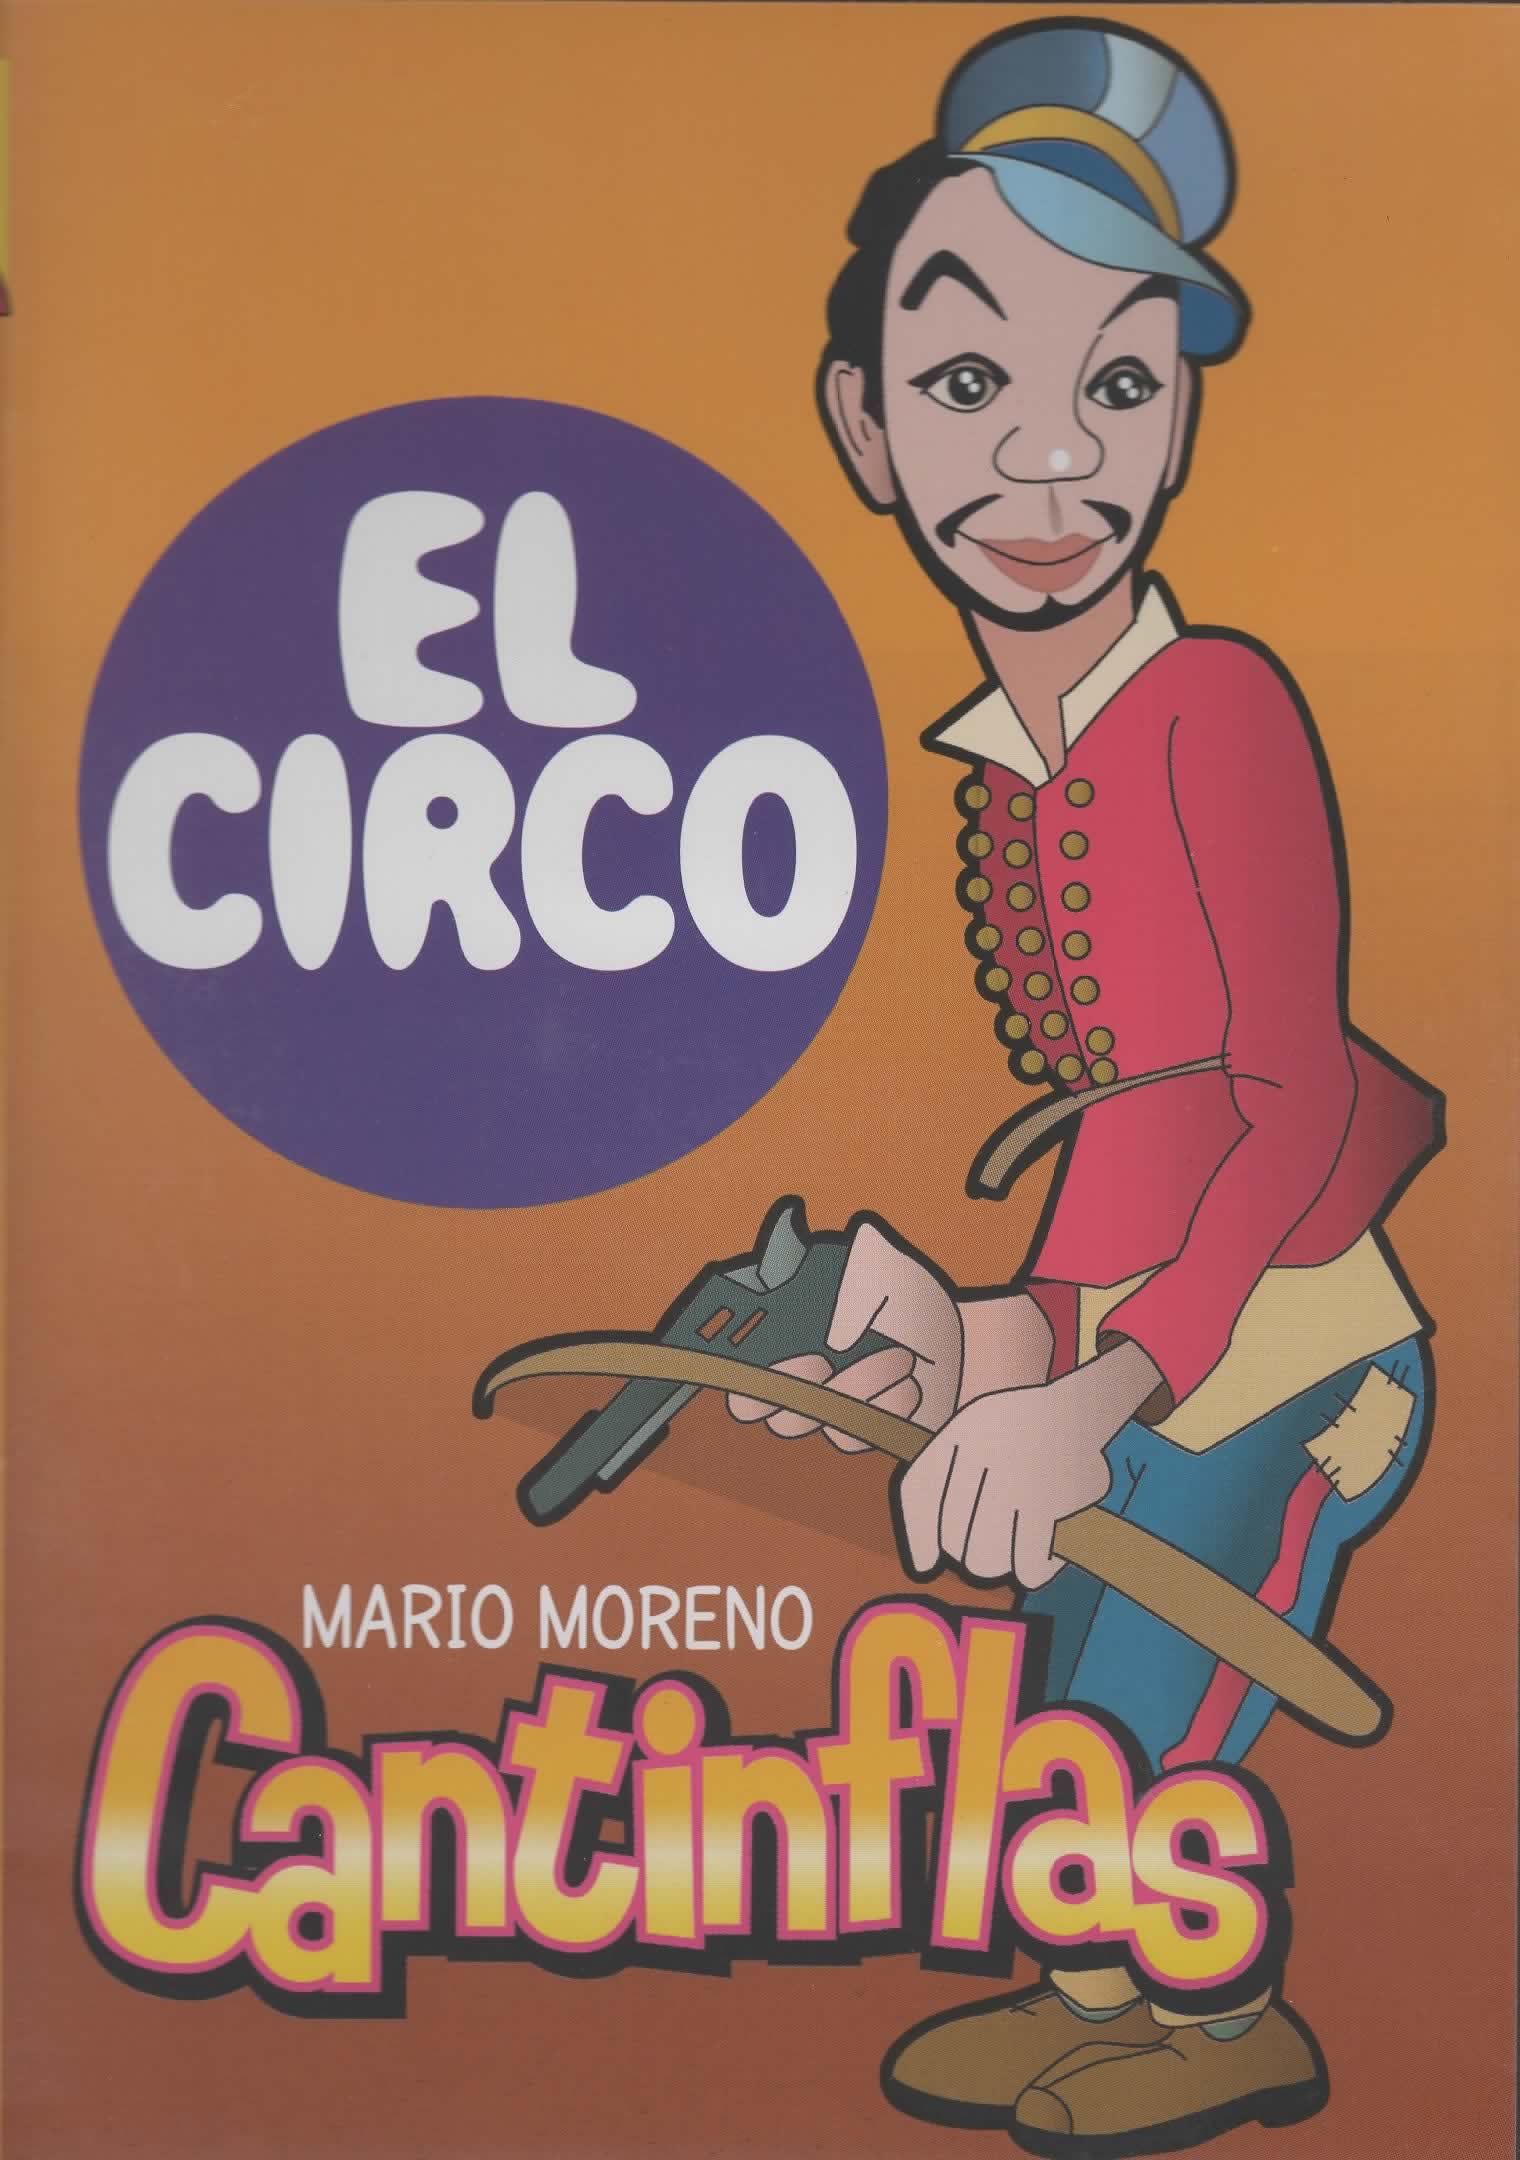 DVD Cantinflas - El circo